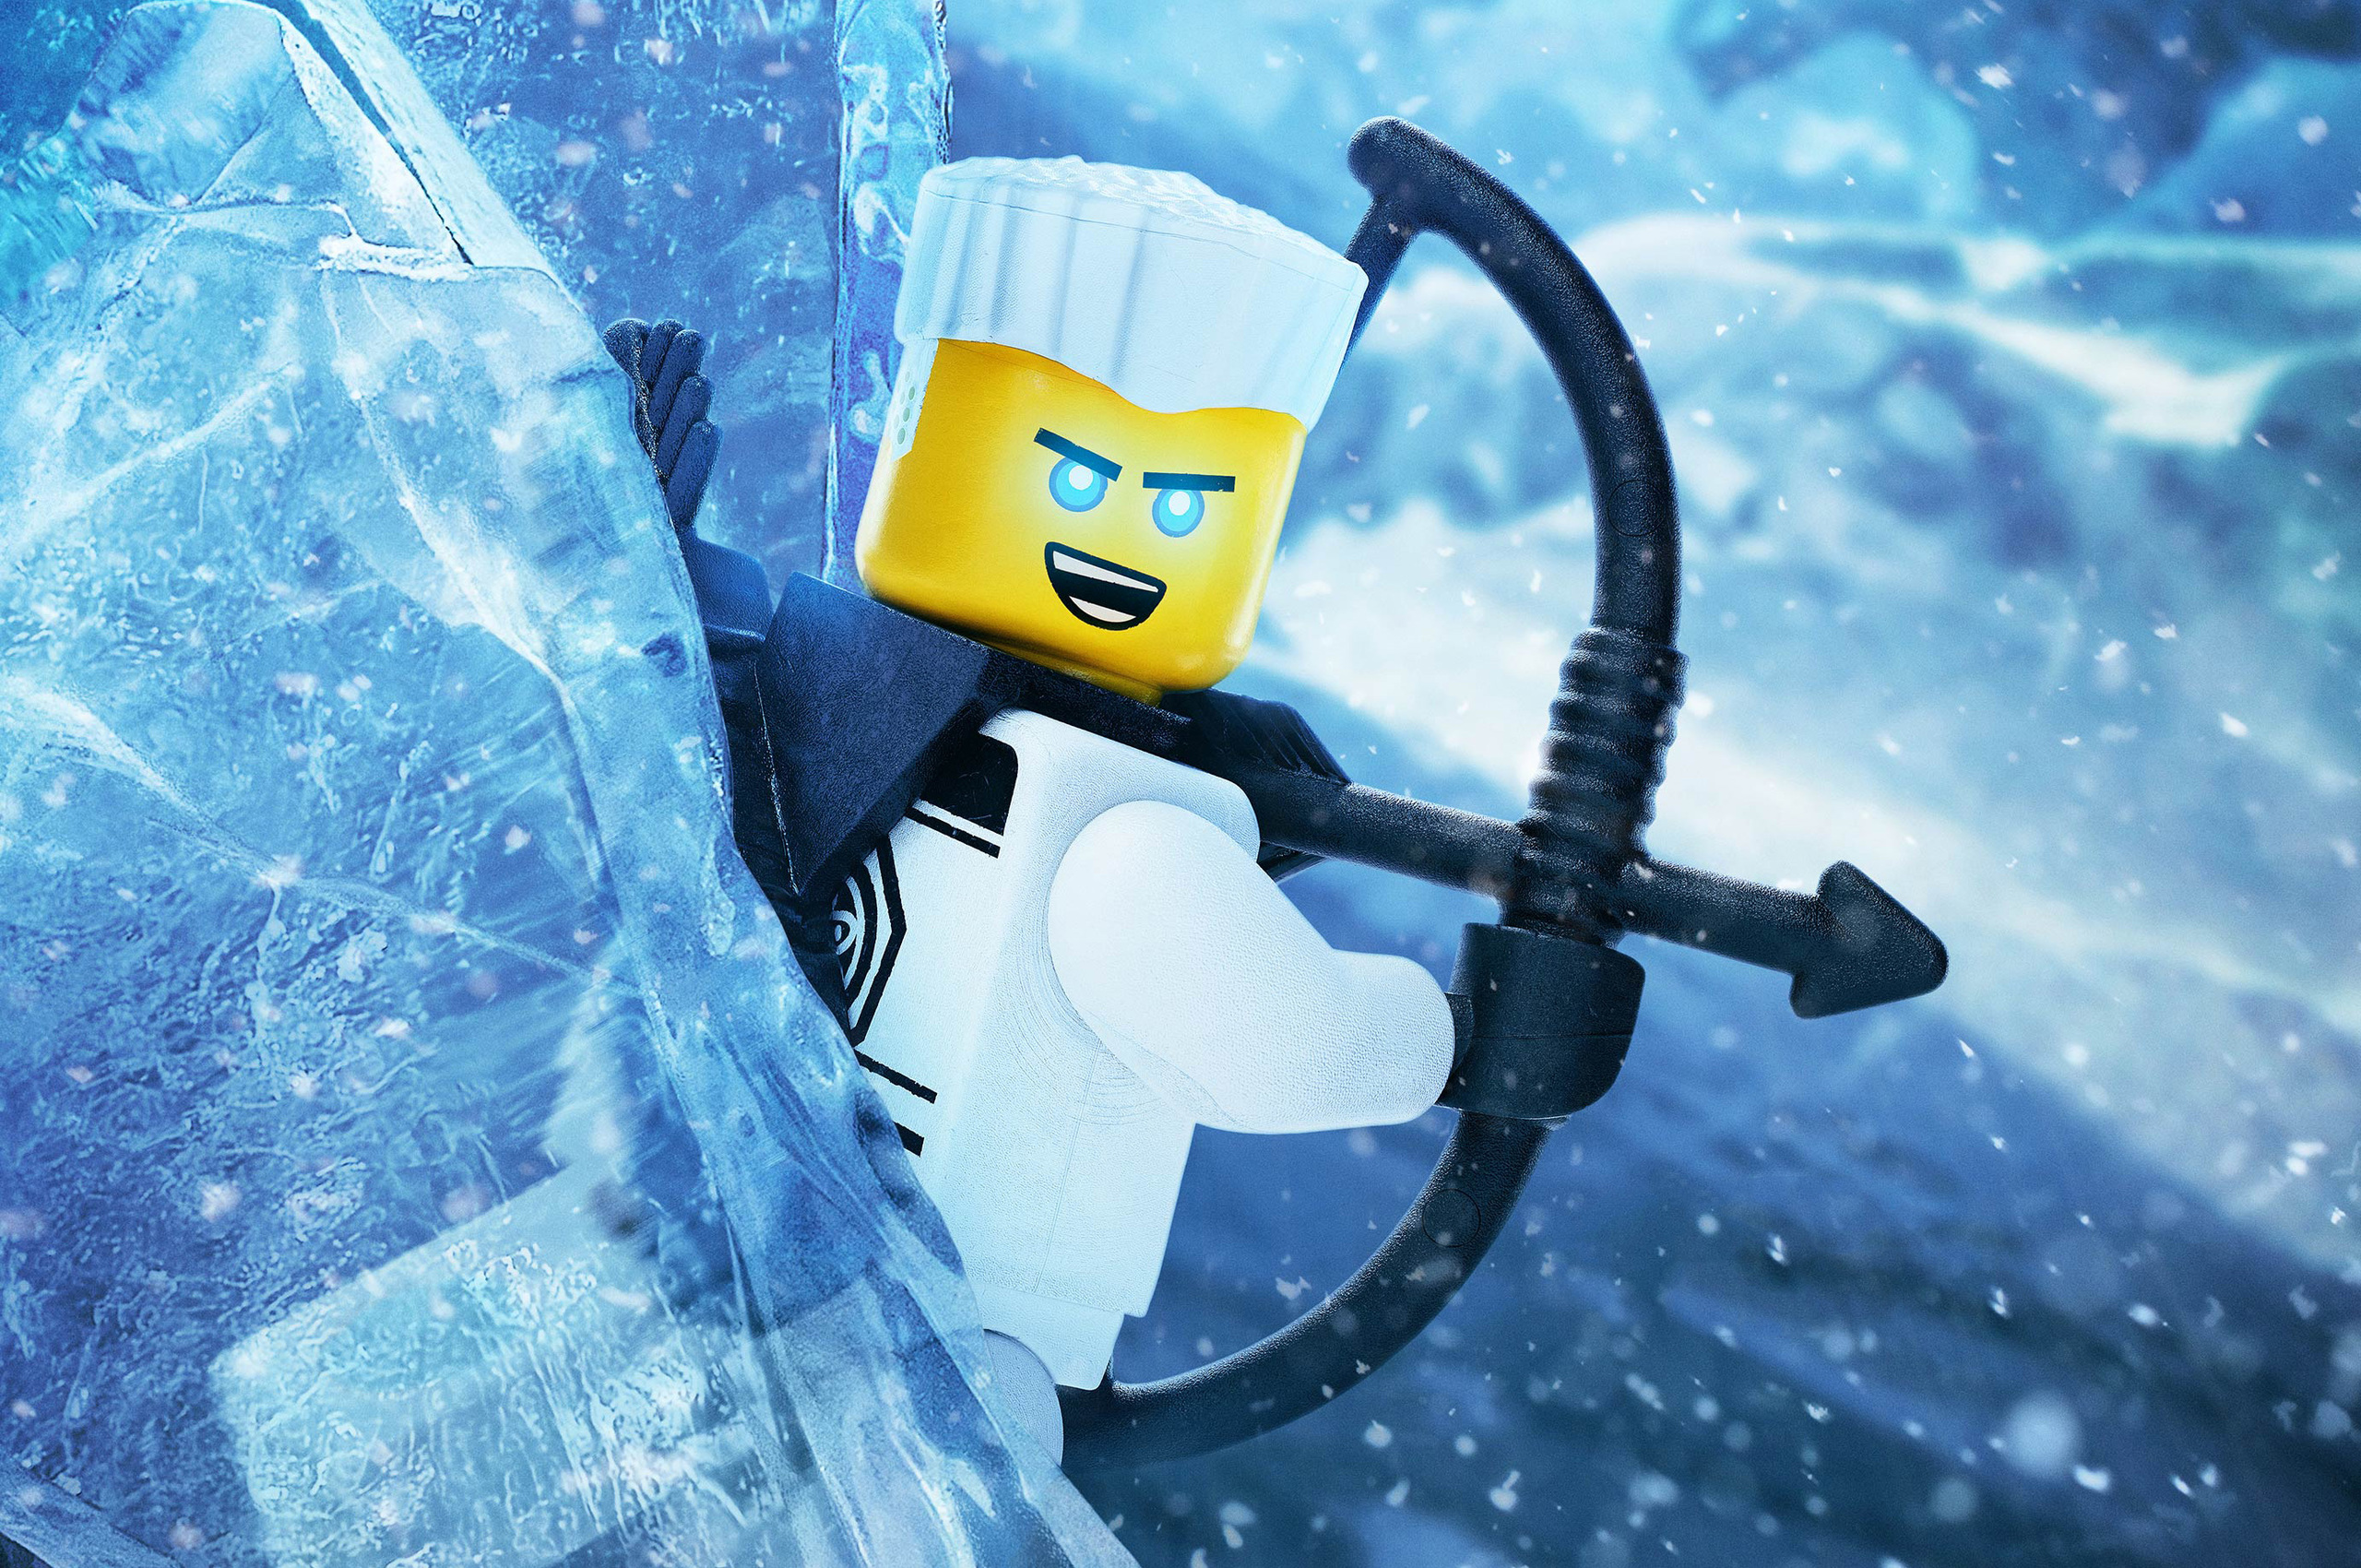 Скачать картинку Кино, Лёд, Лего, Зейн (Ниндзяго), Лего Фильм: Ниндзяго в телефон бесплатно.